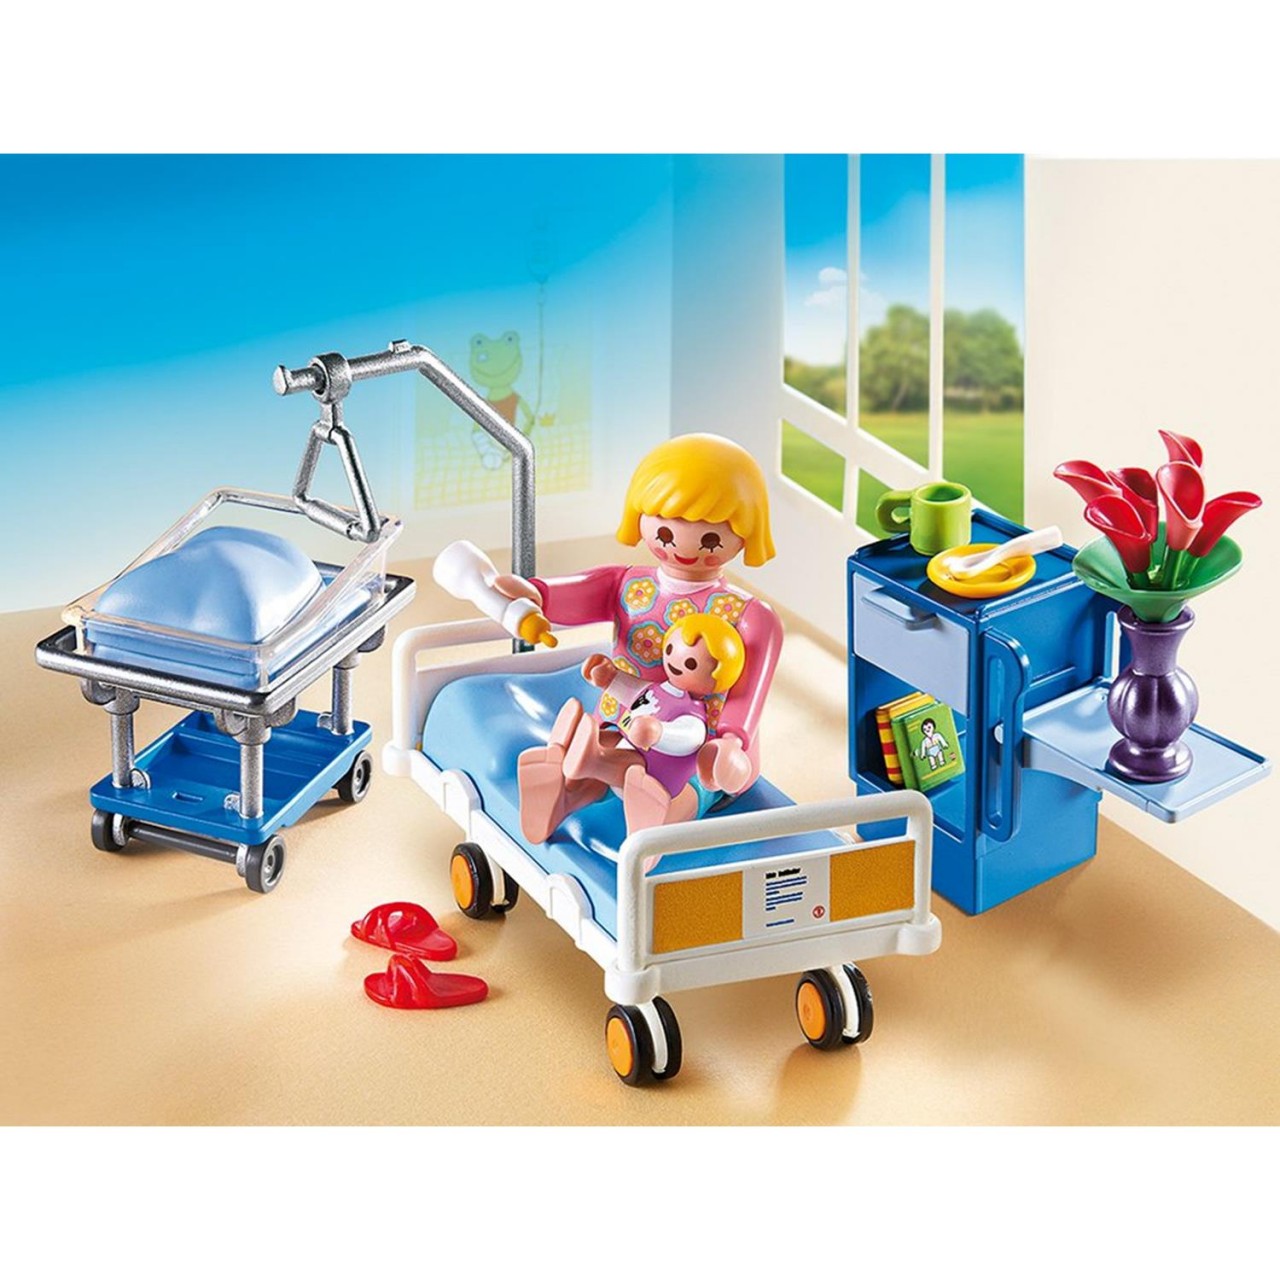 Playmobil 6660 Krankenzimmer mit Babybett